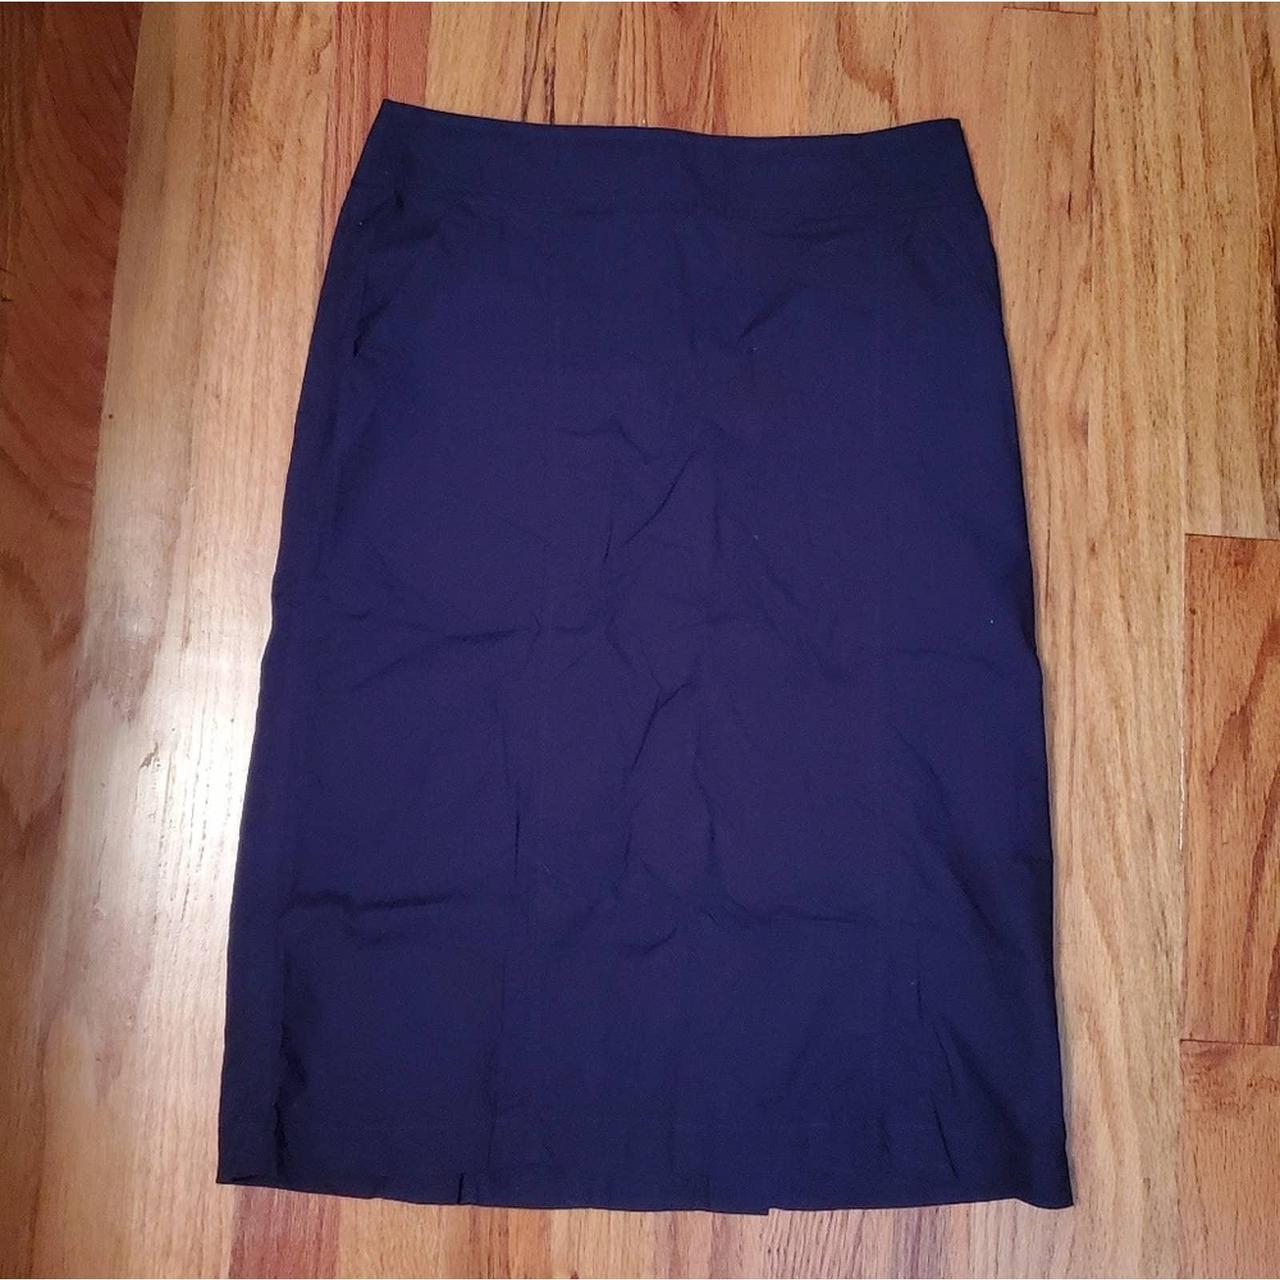 Isabel de Pedro Purpled Dark Blue Skirt. Size 4. In... - Depop